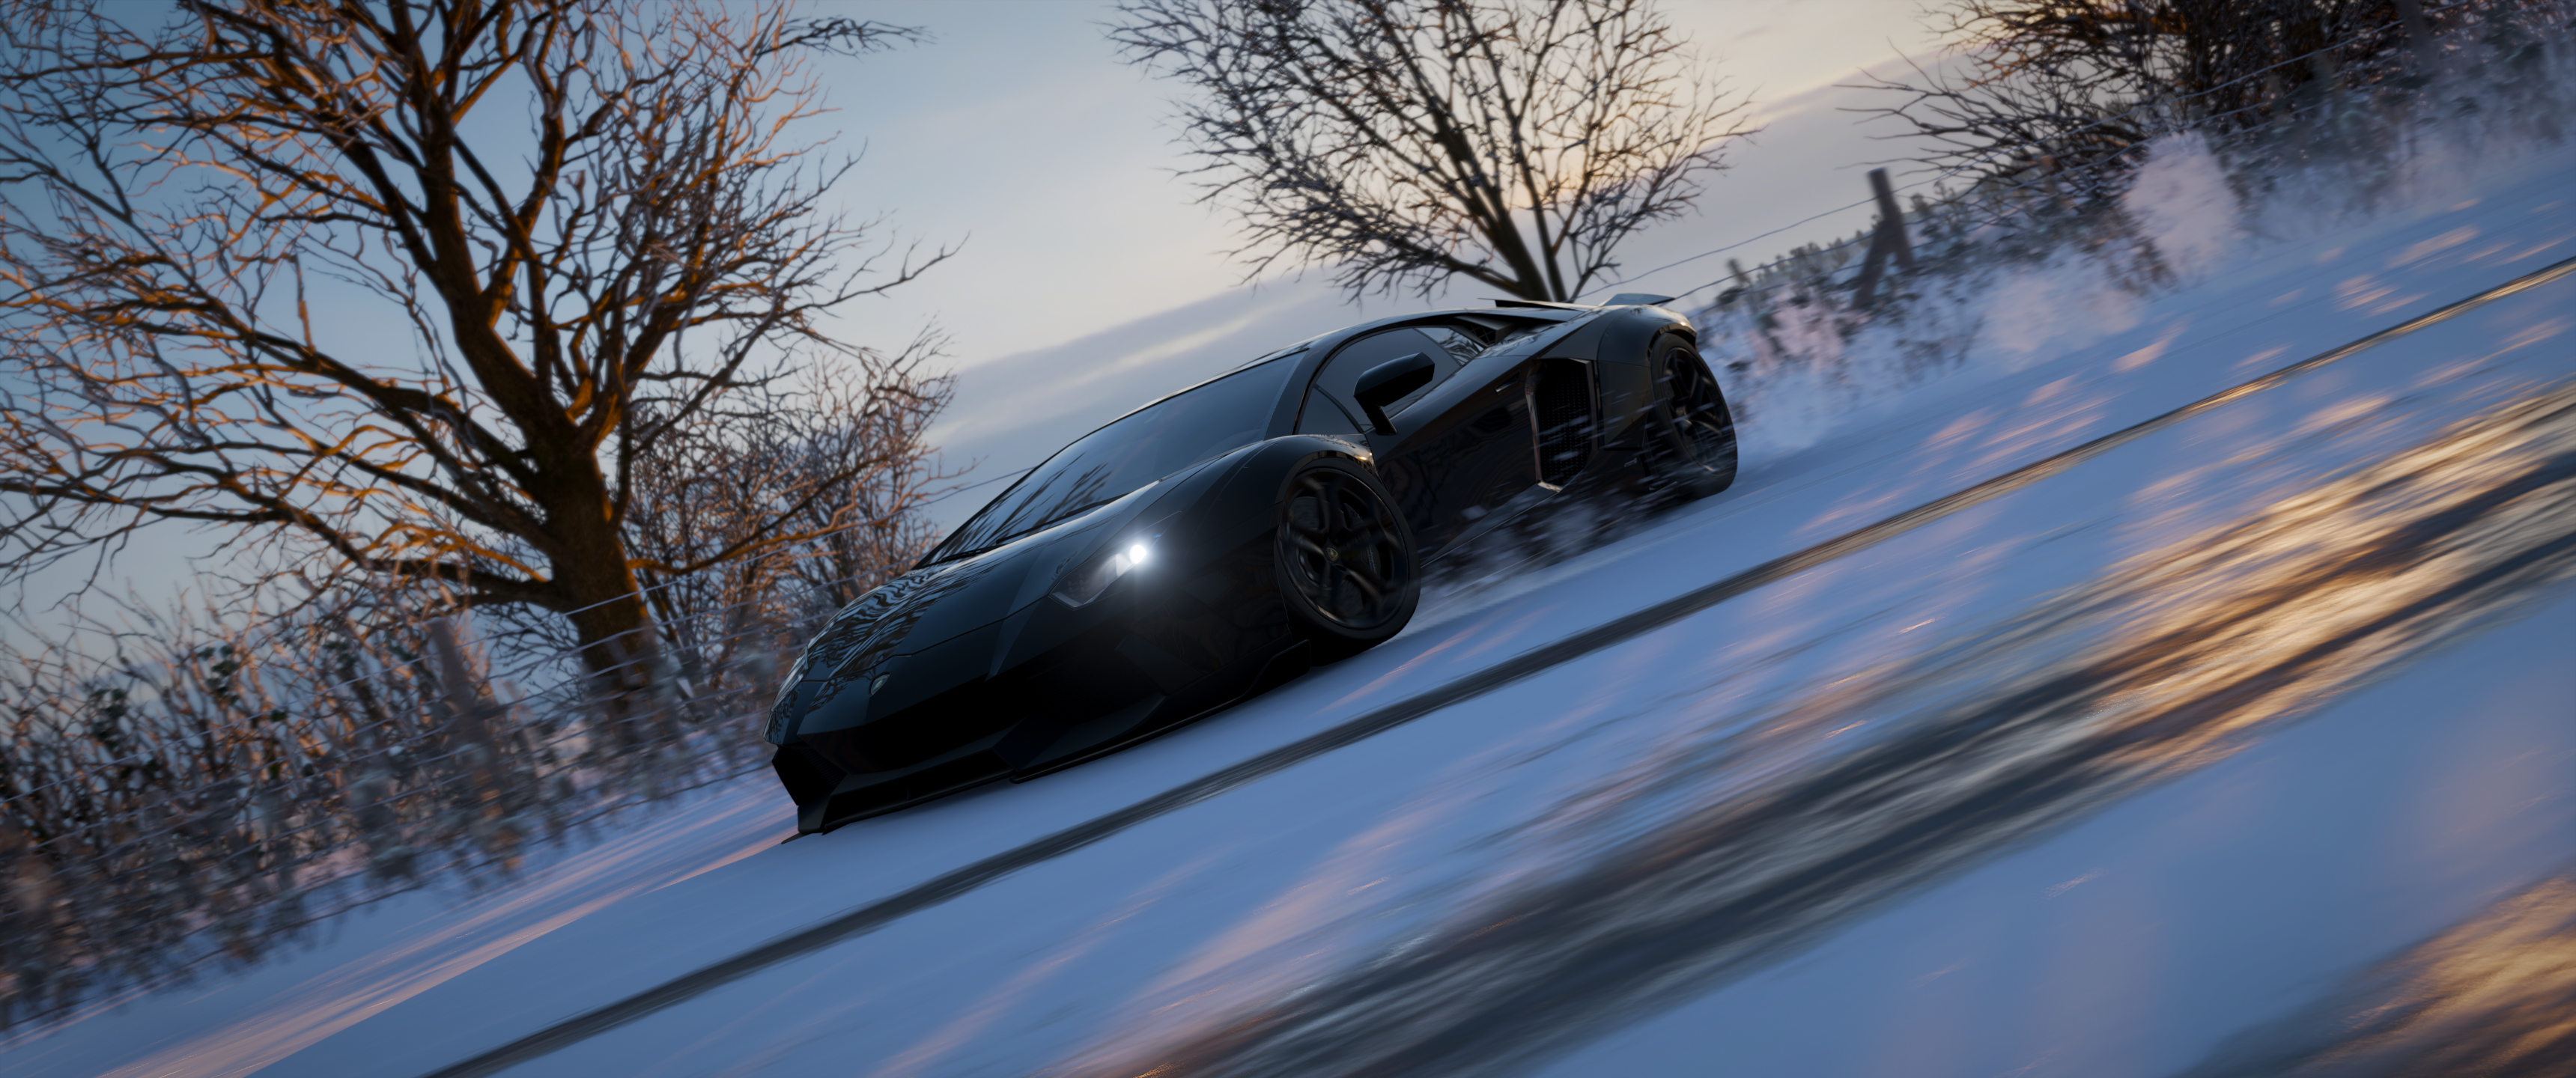 Forza Horizon 4 Car Lamborghini Aventador J PC Gaming 3440x1440